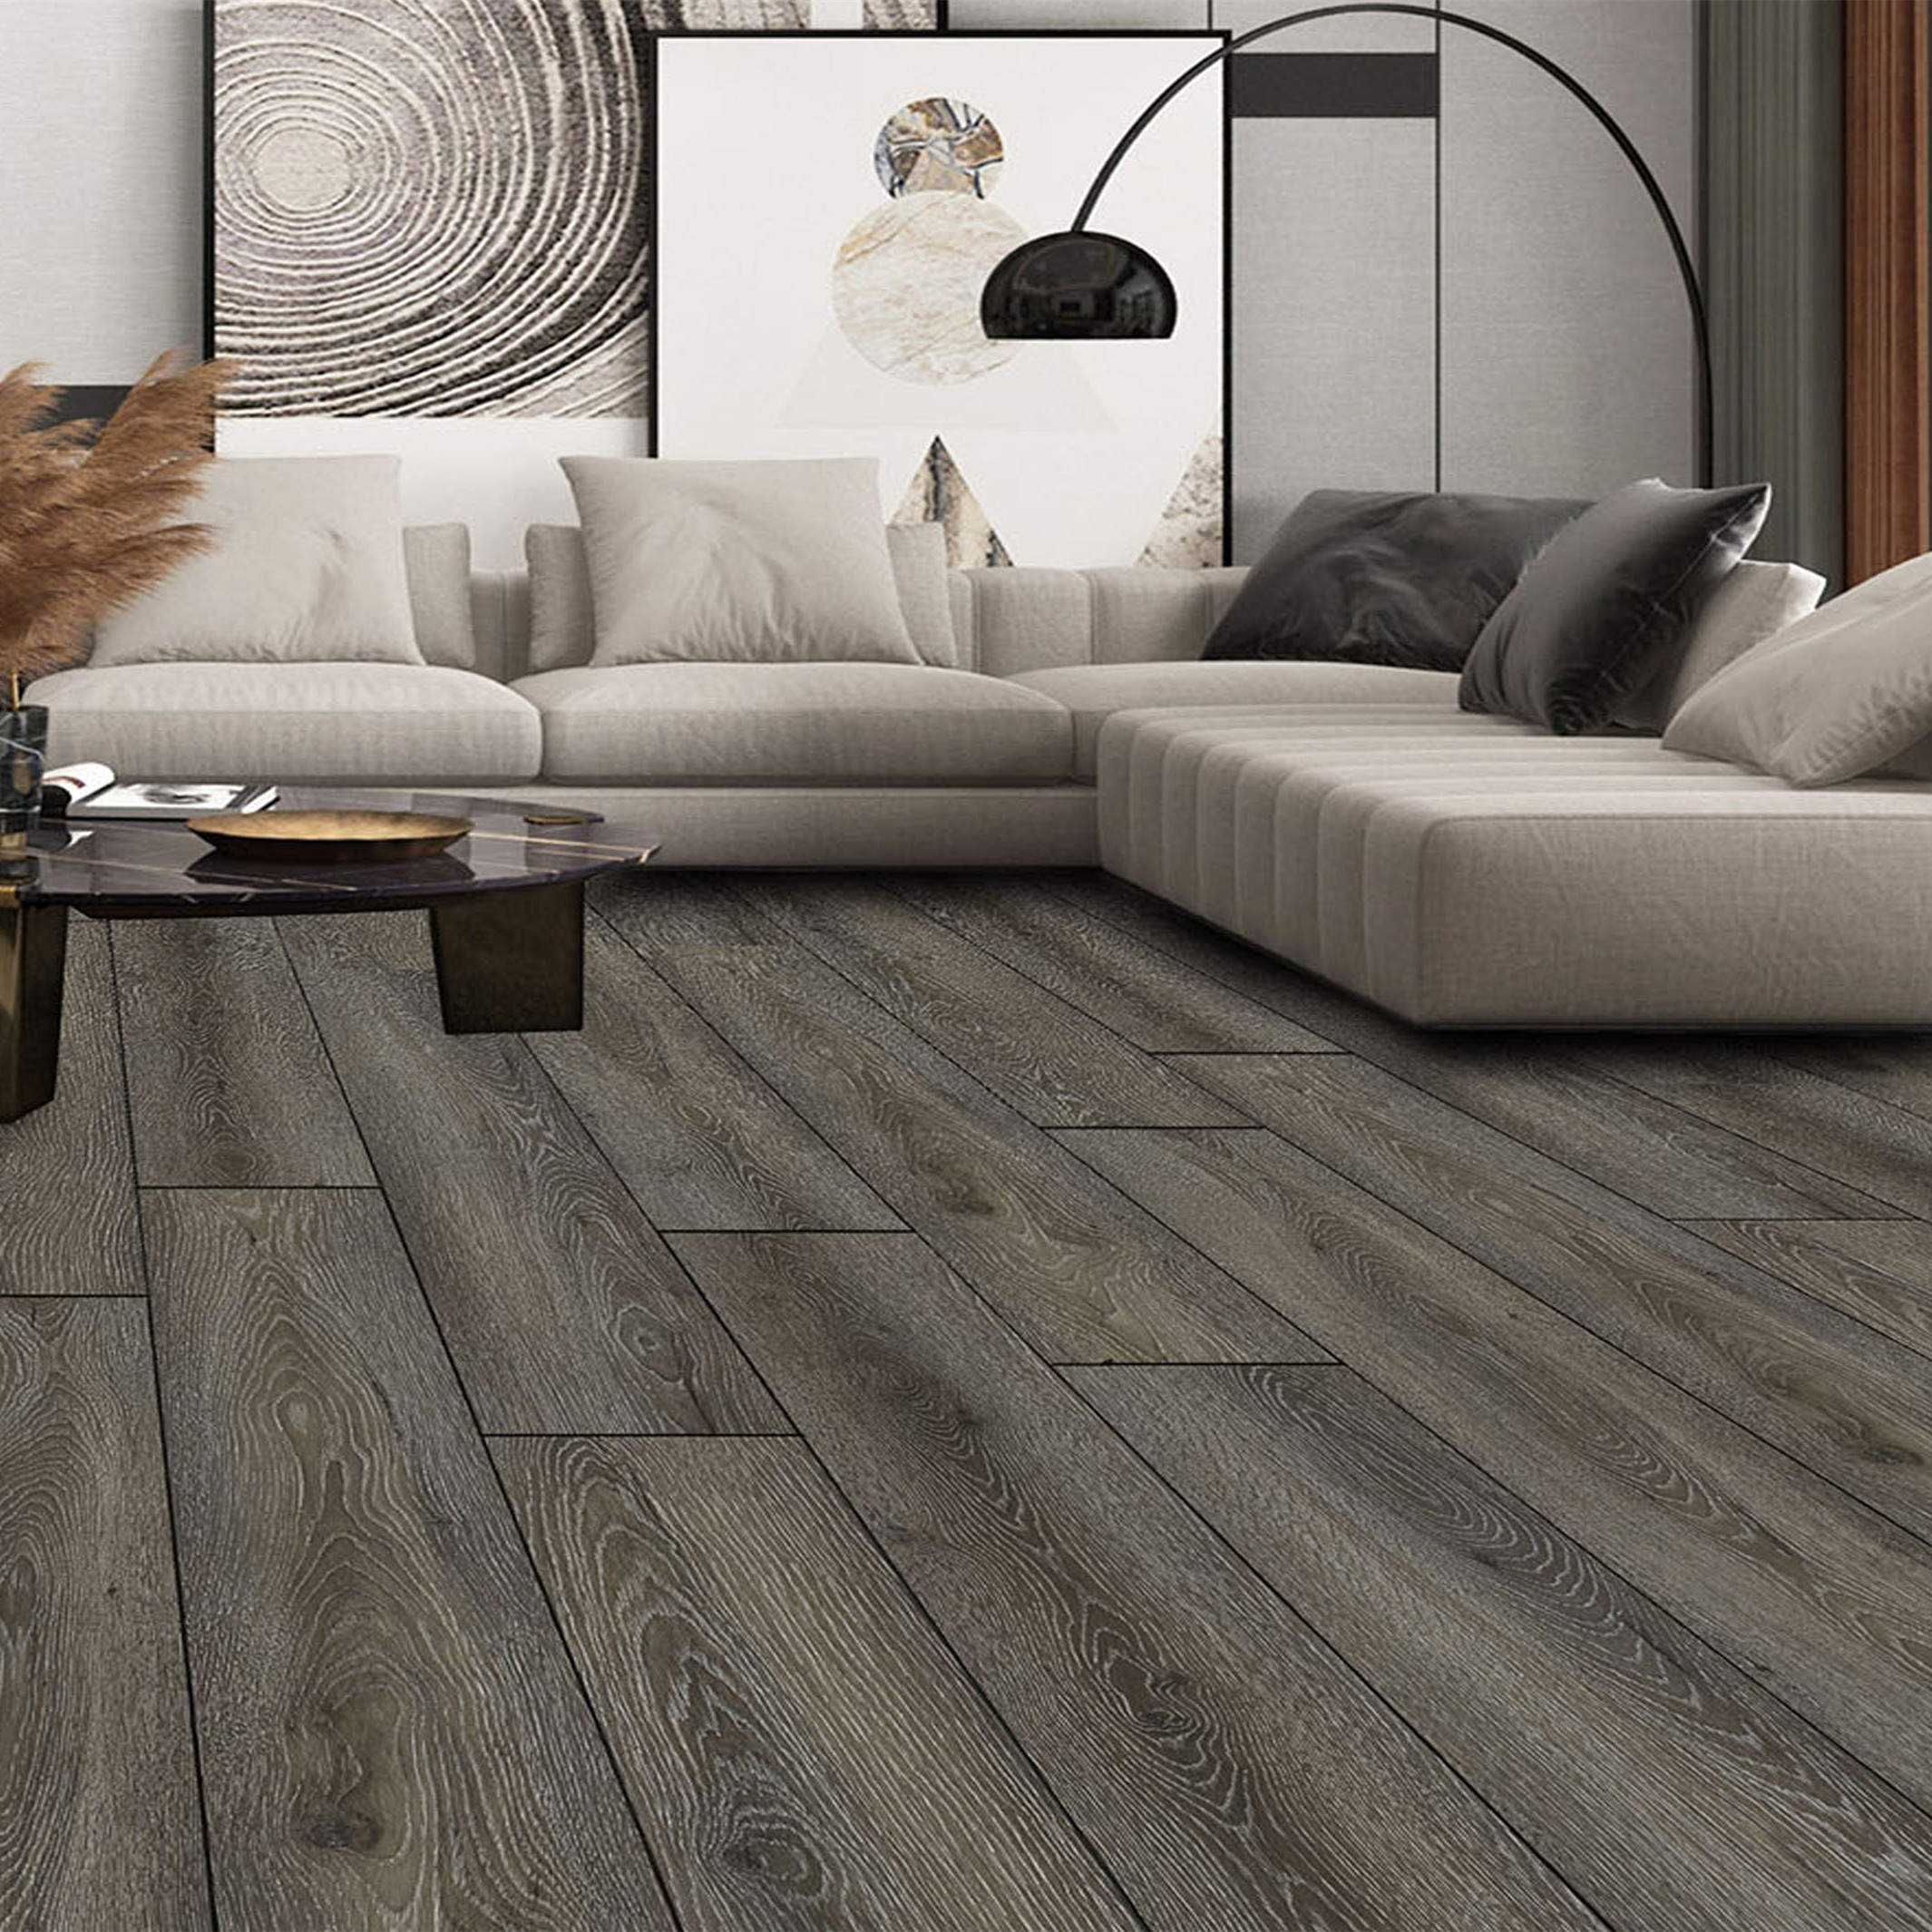 2020 New Style Spc Vinyl -
 Interior of room vinyl flooring plank from China supplier – Kangton